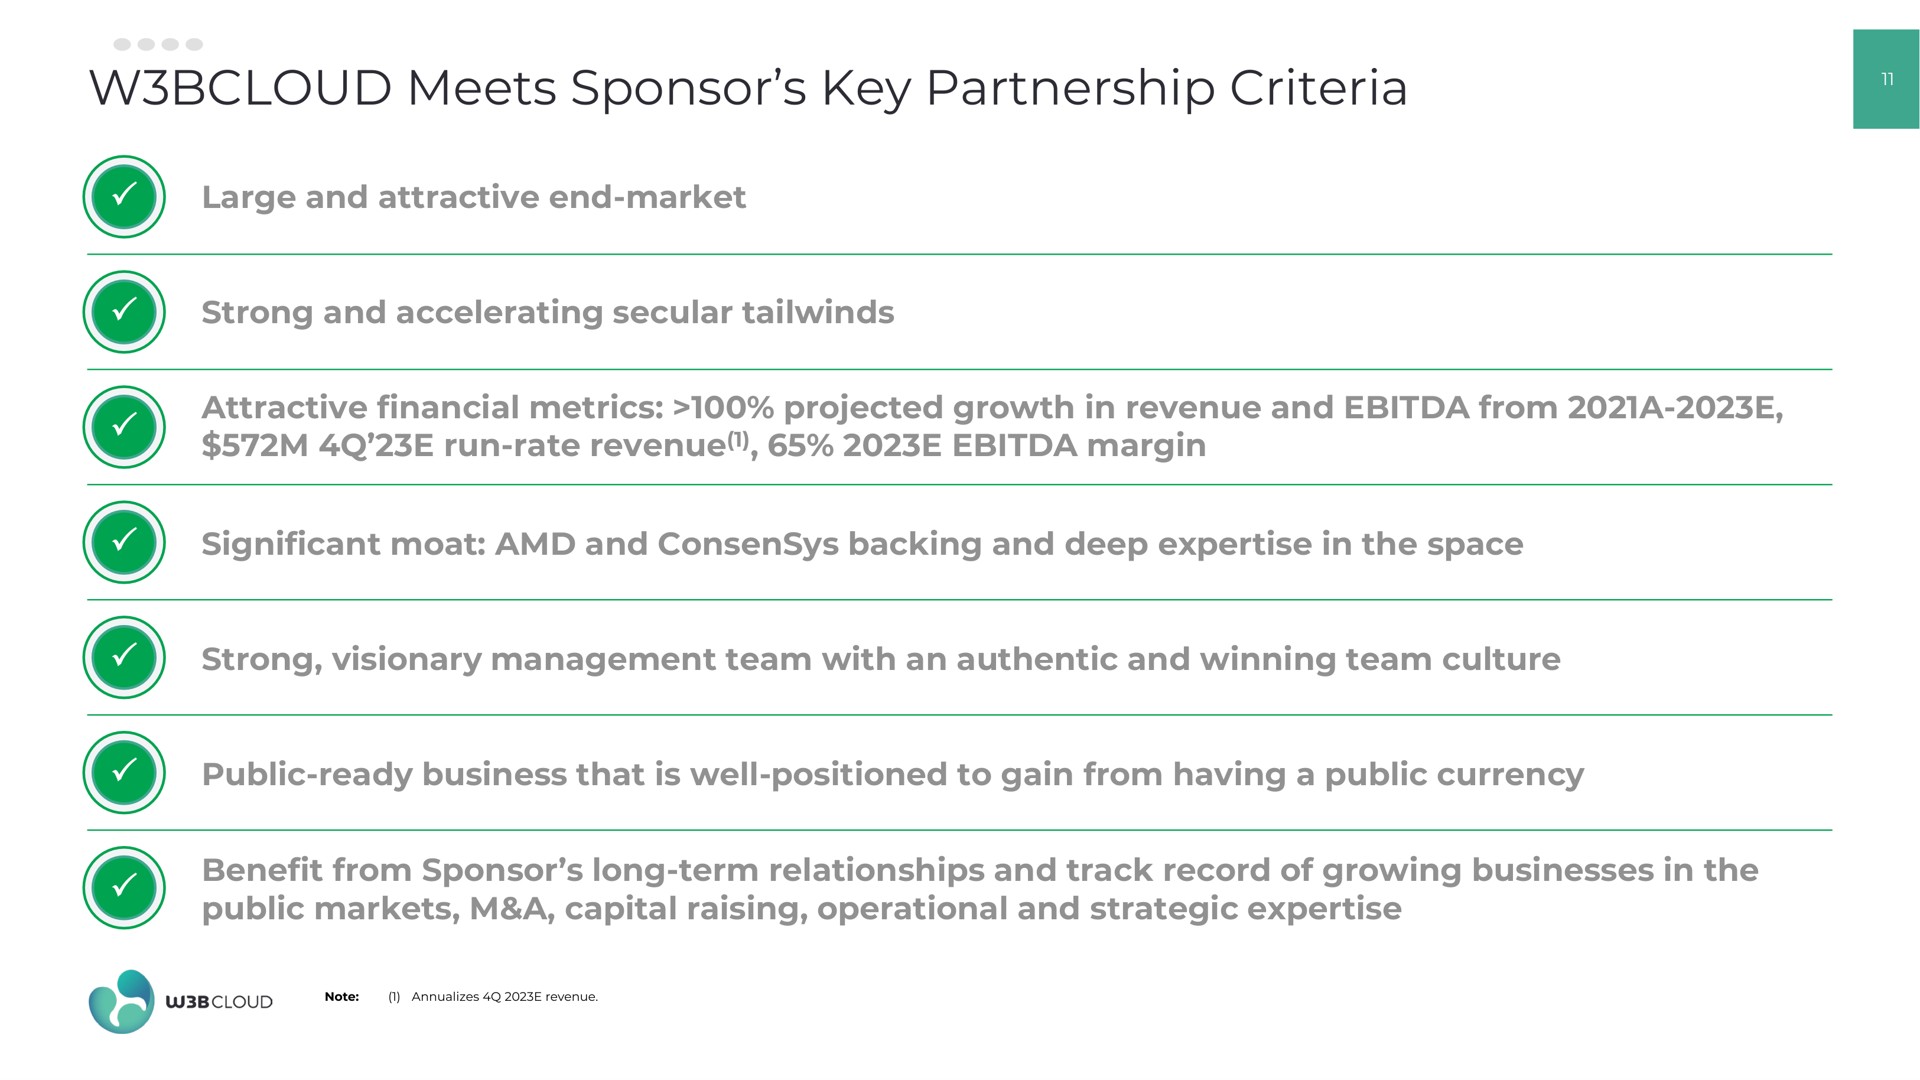 meets sponsor key partnership criteria | W3BCLOUD